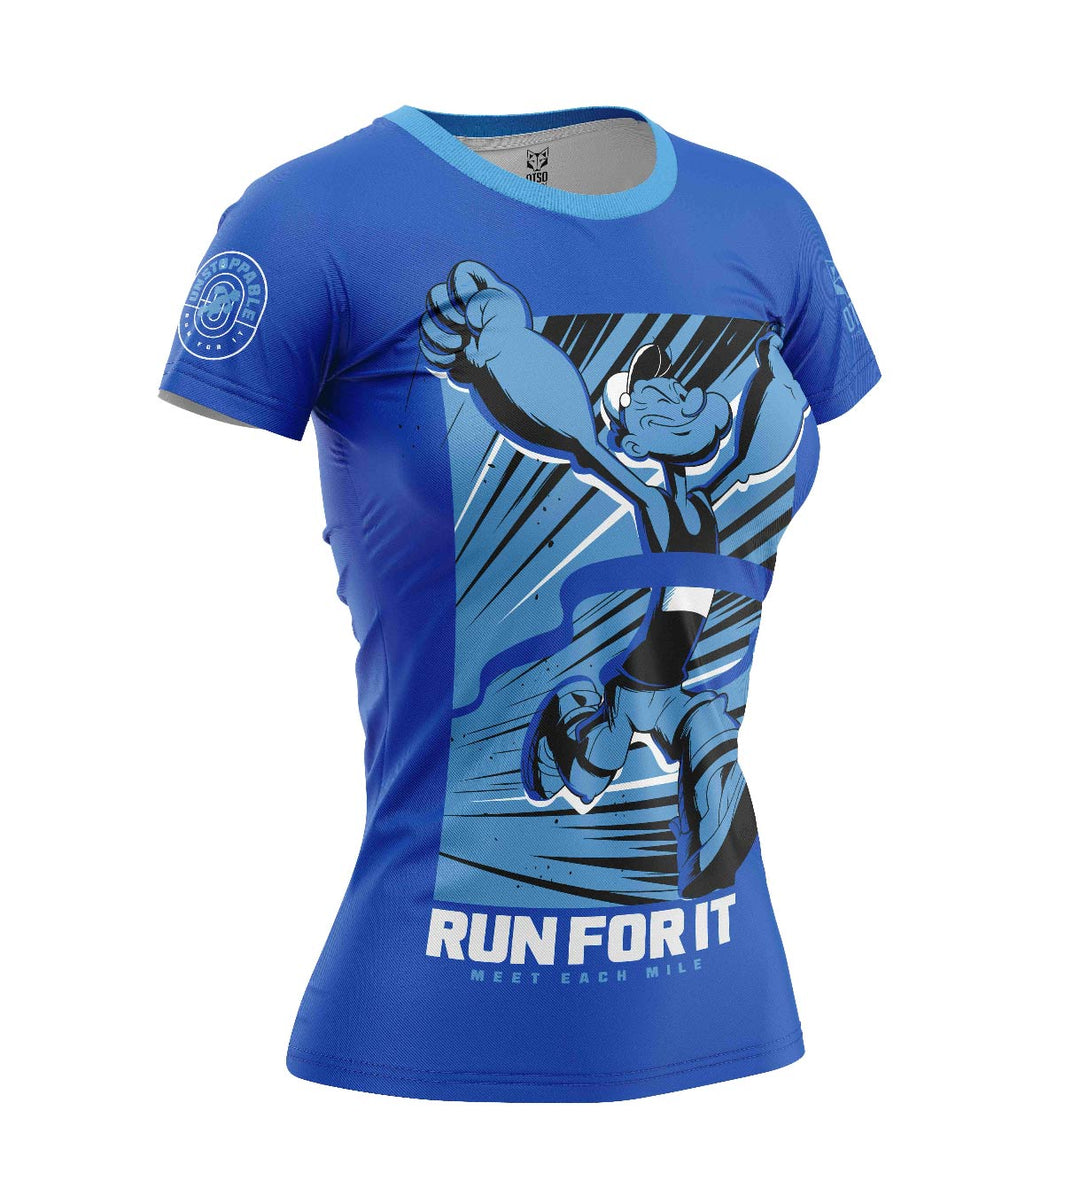 OTSO Women's T-Shirt Popeye Run For It (レディース半袖Tシャツ ポパイ ラン フォー イット)